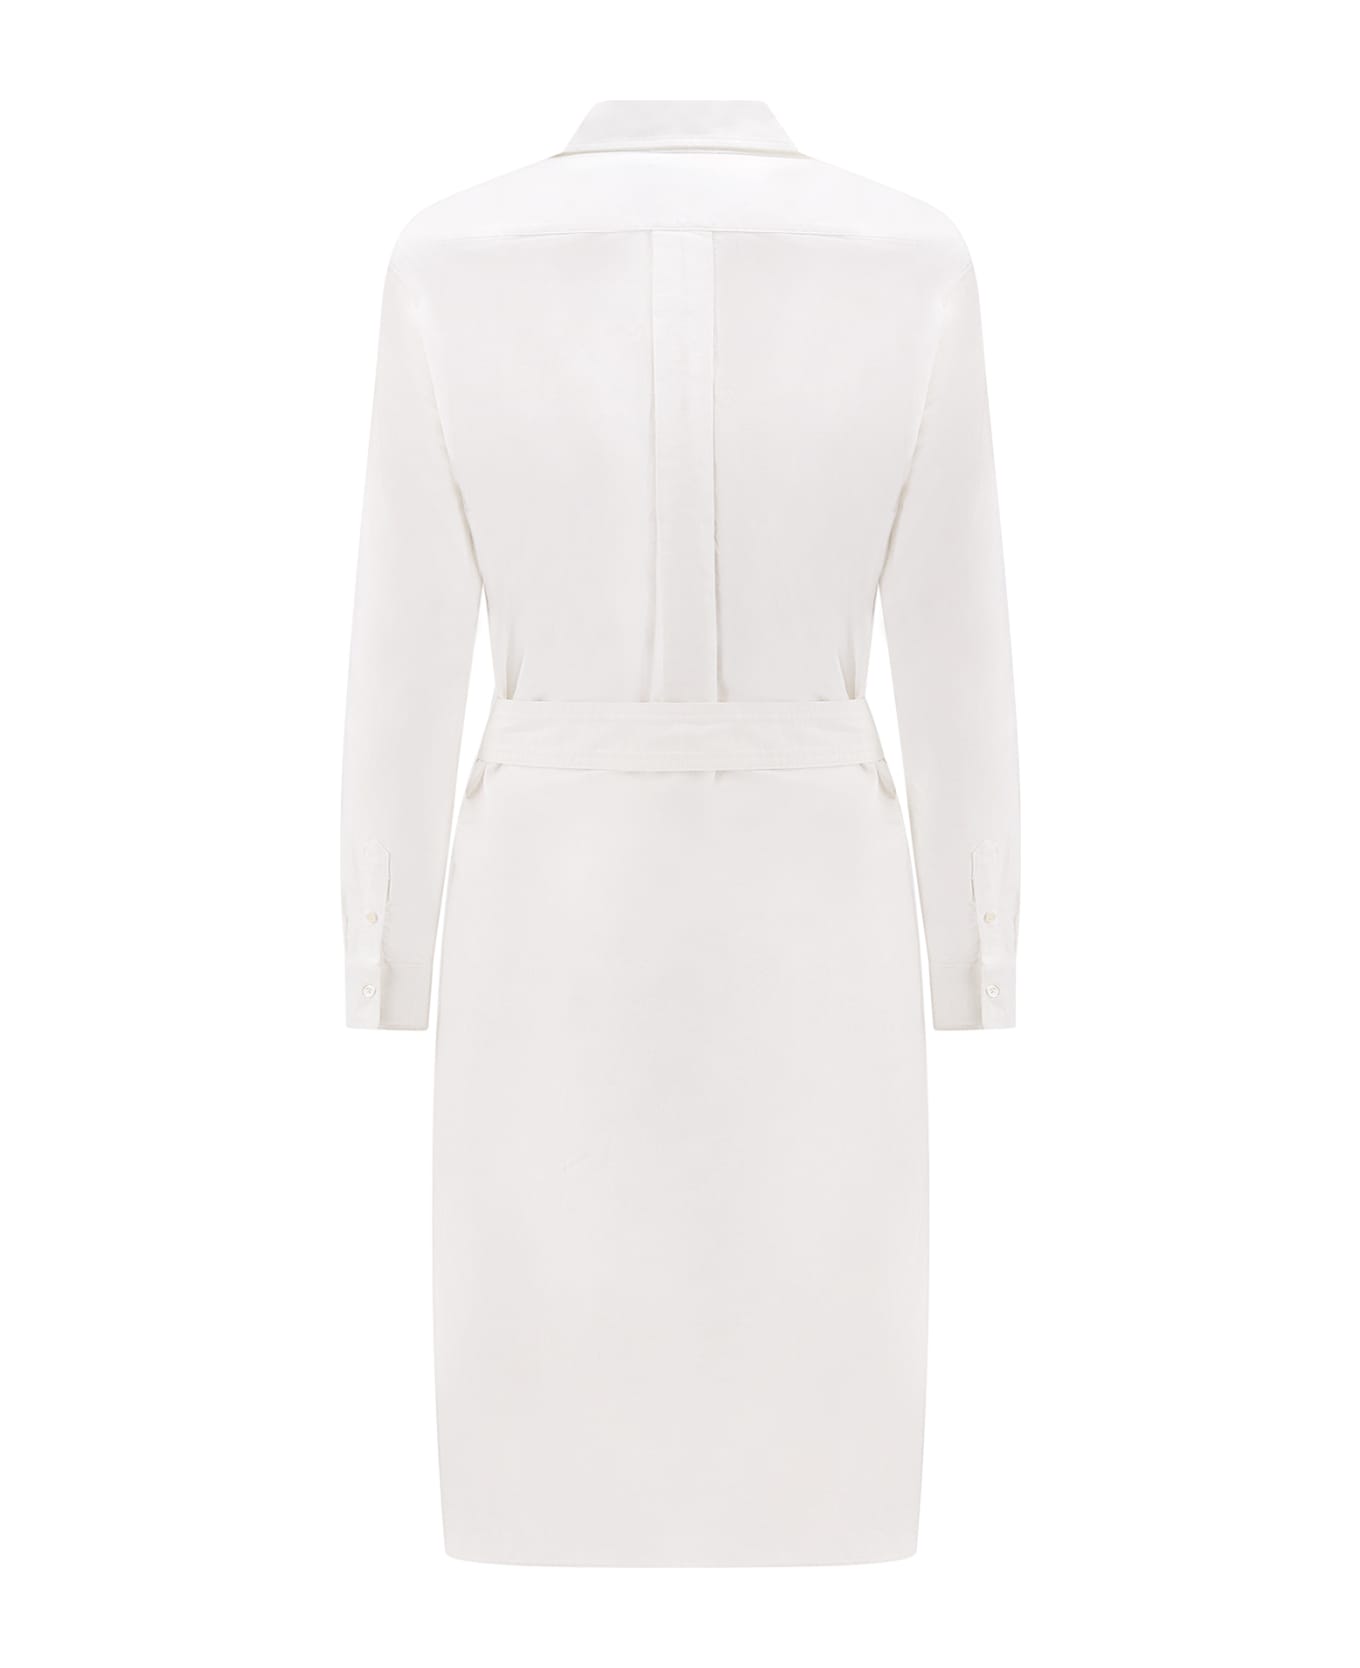 Ralph Lauren Cotton Chemisier Dress - White